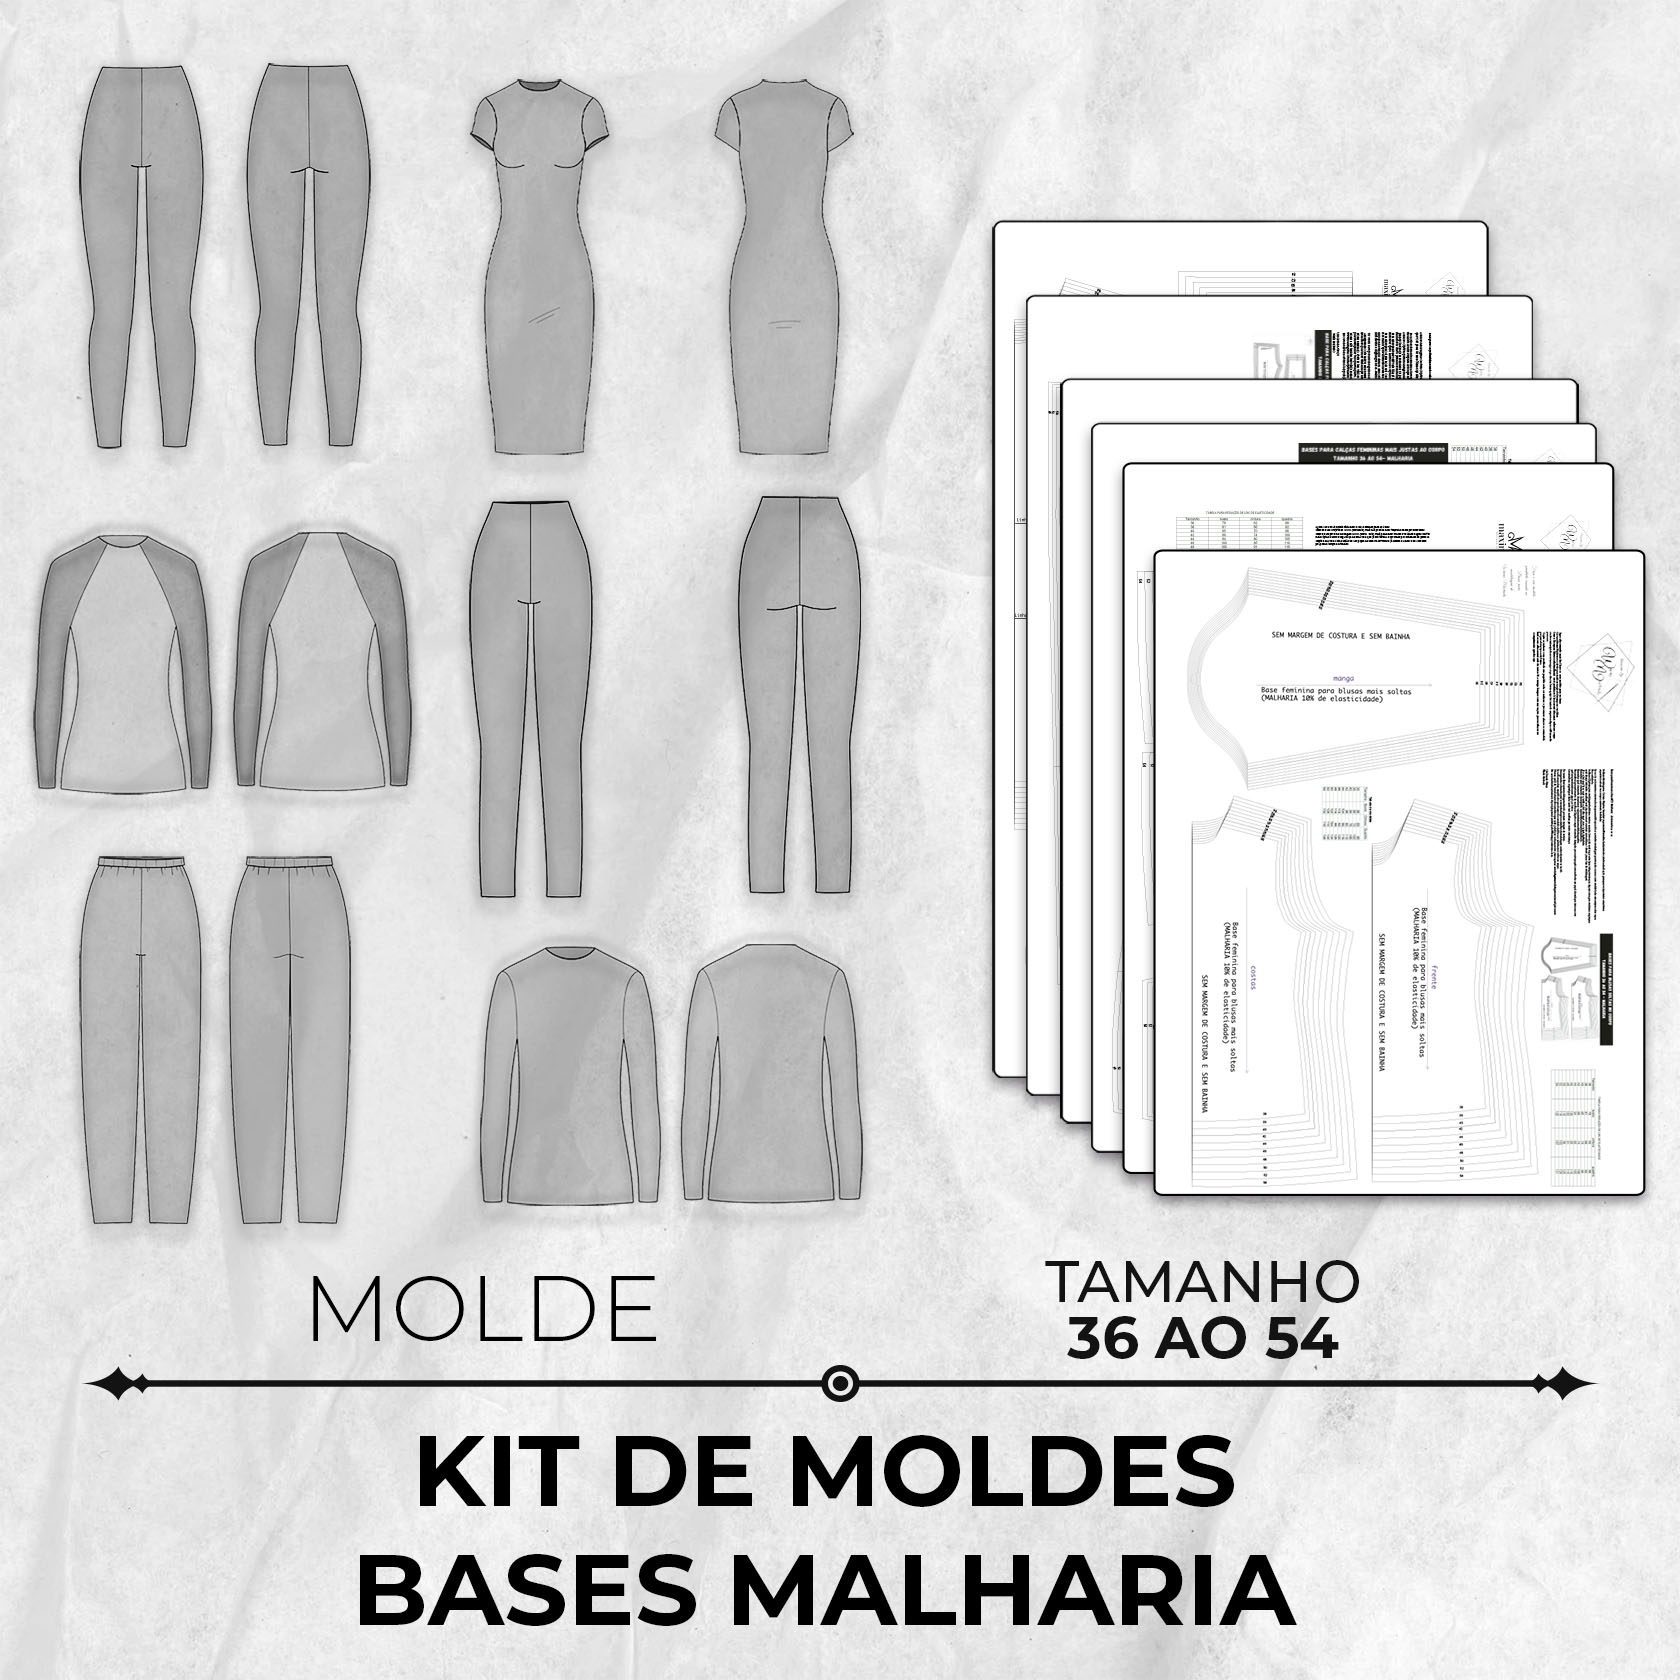 Kit de Moldes Bases Malharia tamanho 36 ao 54 by Wania Machado